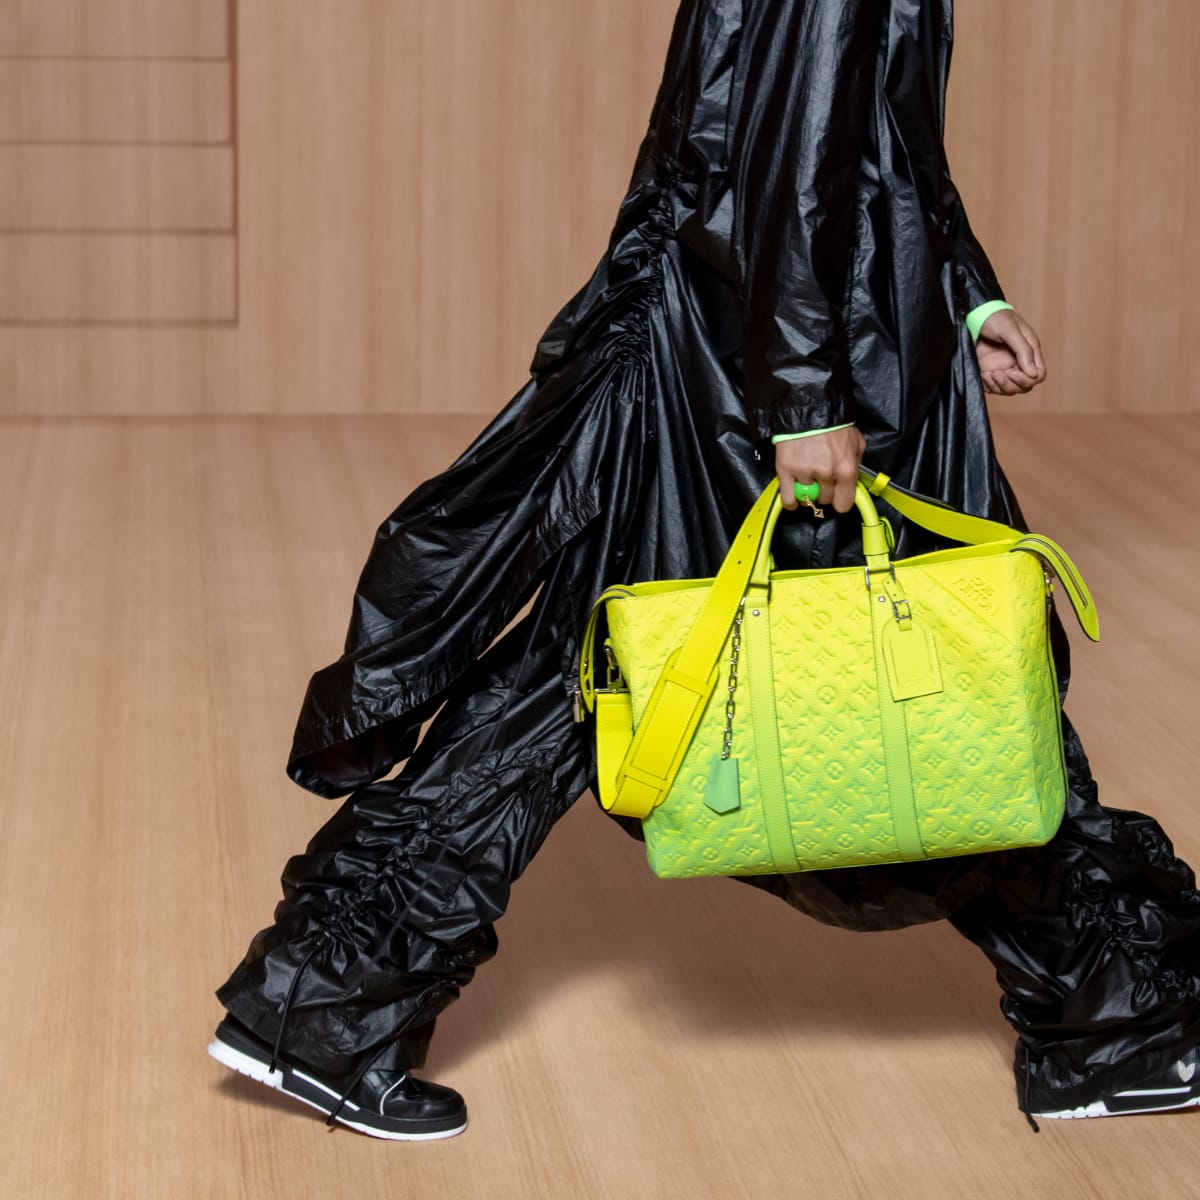 LOUIS VUITTON // XXL BAG #fashion #louisvuitton #runways #bags #amazing  #review41 #style @LouisVuitton